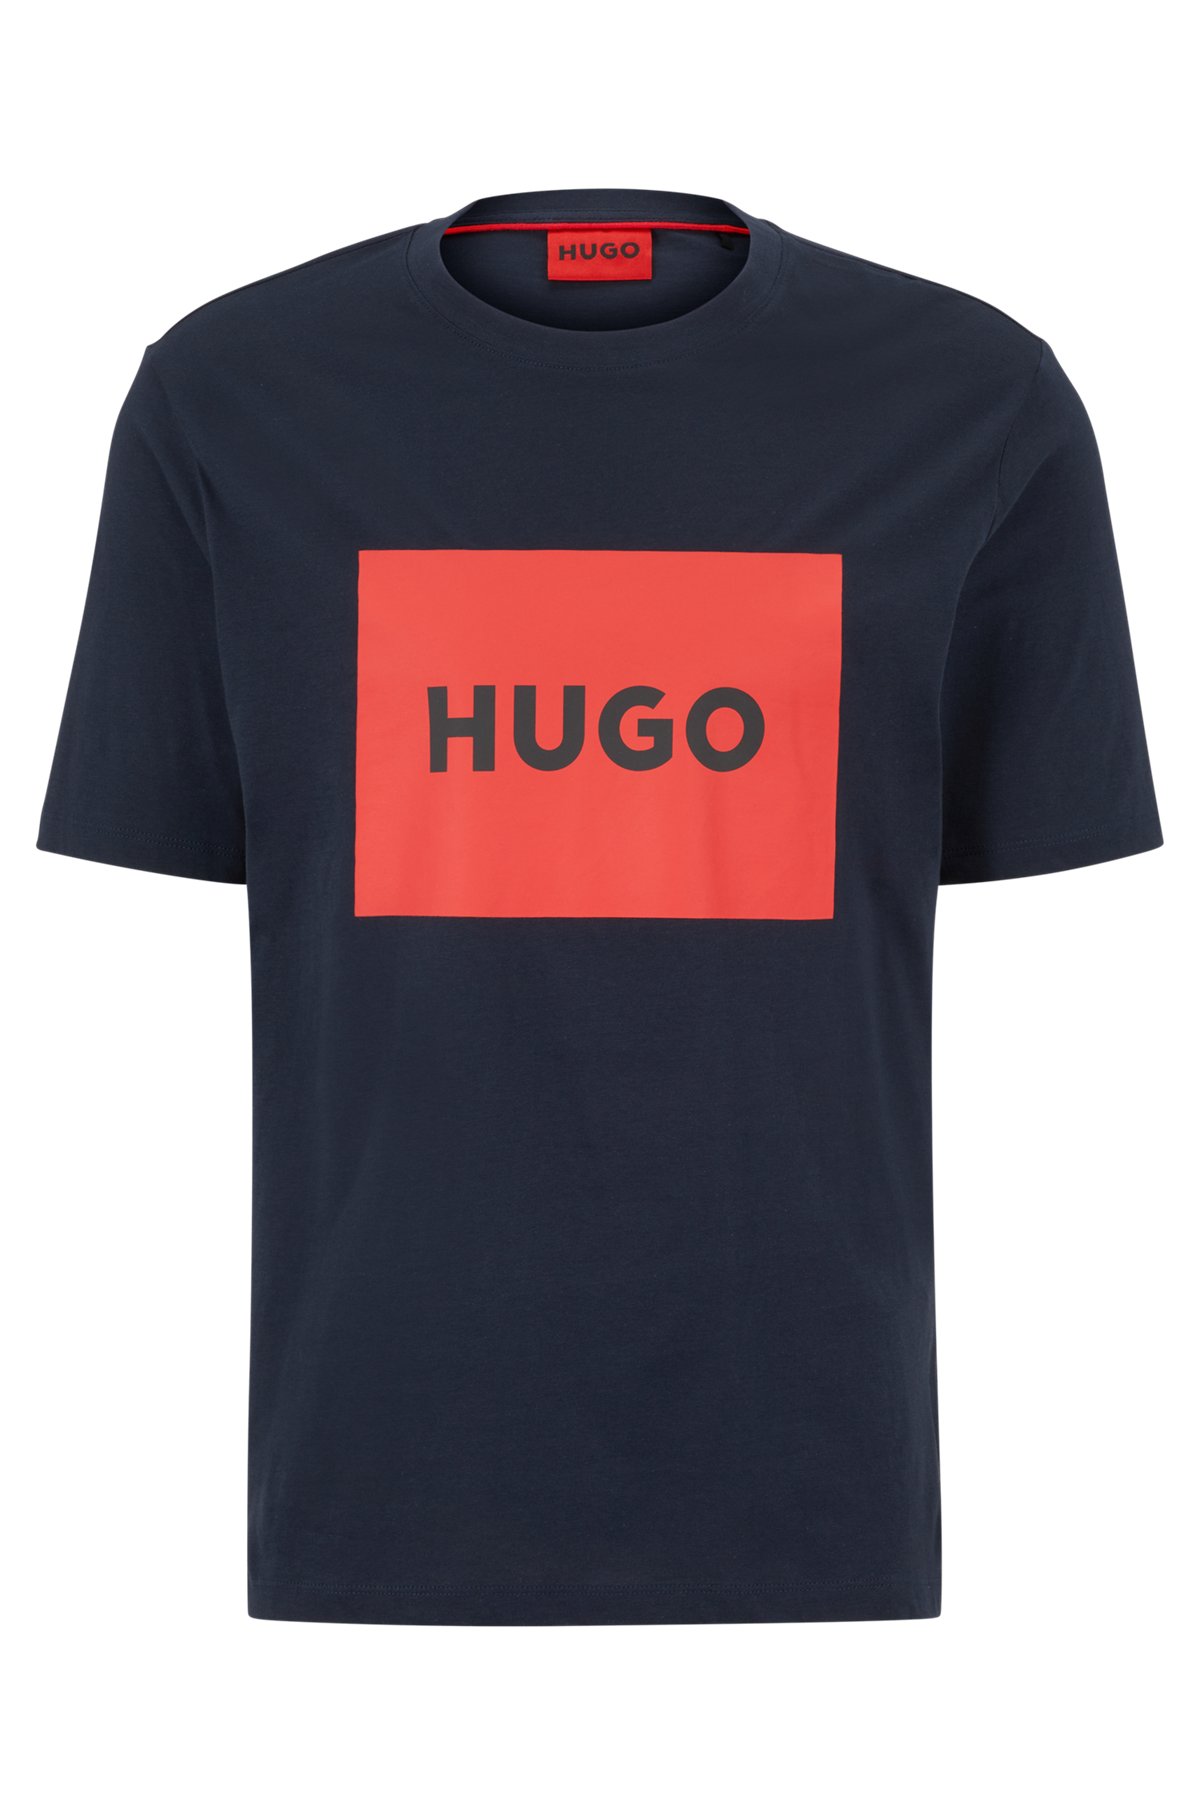 HUGO - クルーネックTシャツ コットンジャージー ボックスロゴ